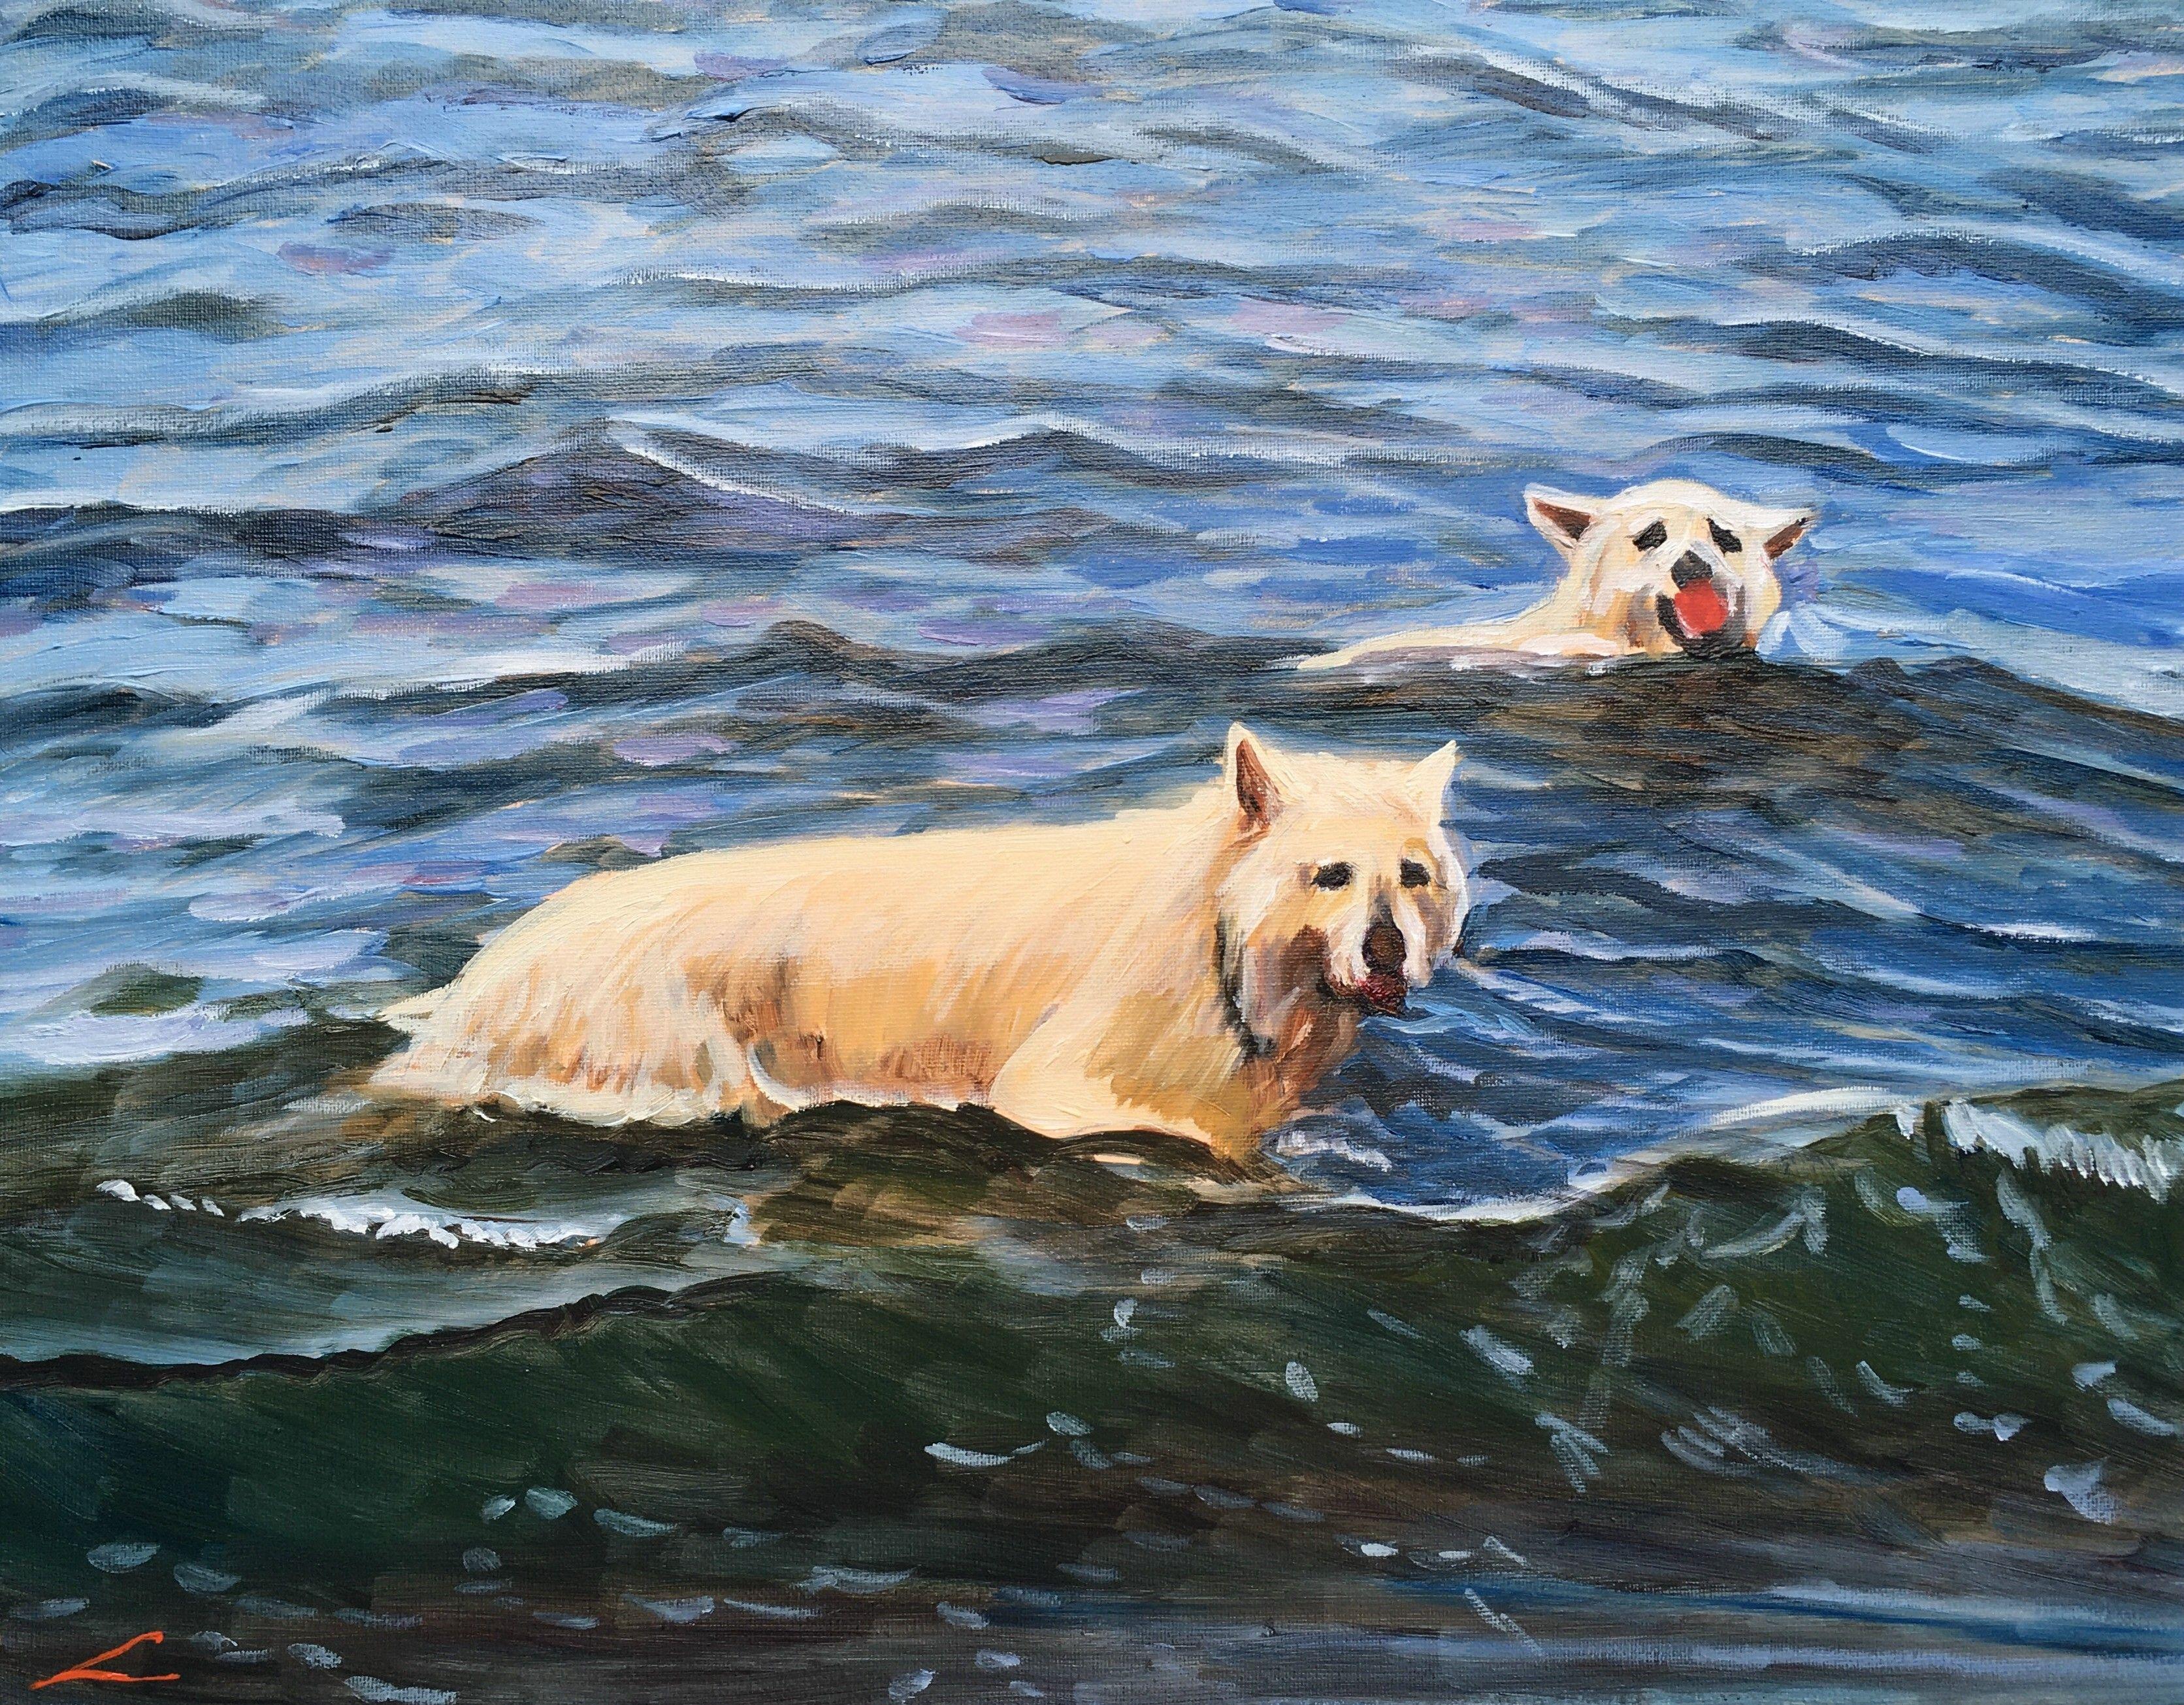 Animal Painting Elena Sokolova - Chiens nageurs, peinture, huile sur toile